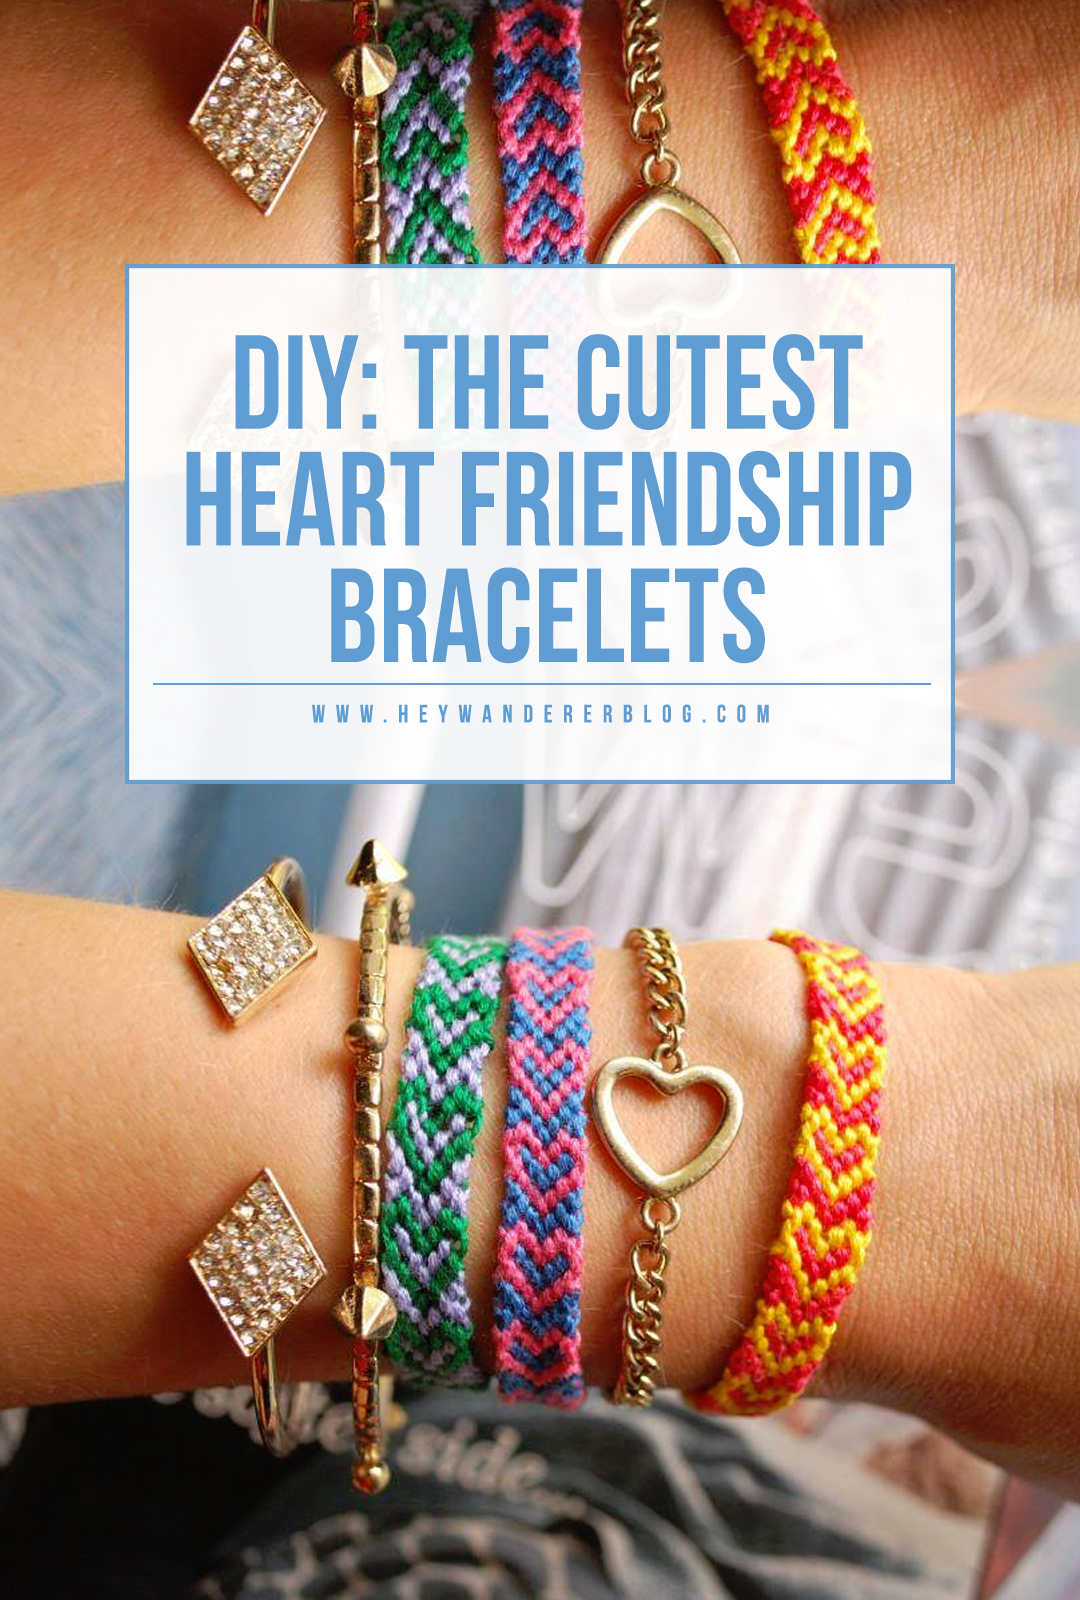 Giddy Up Workshop: Happy Valentine's Heart Pattern Friendship Bracelet